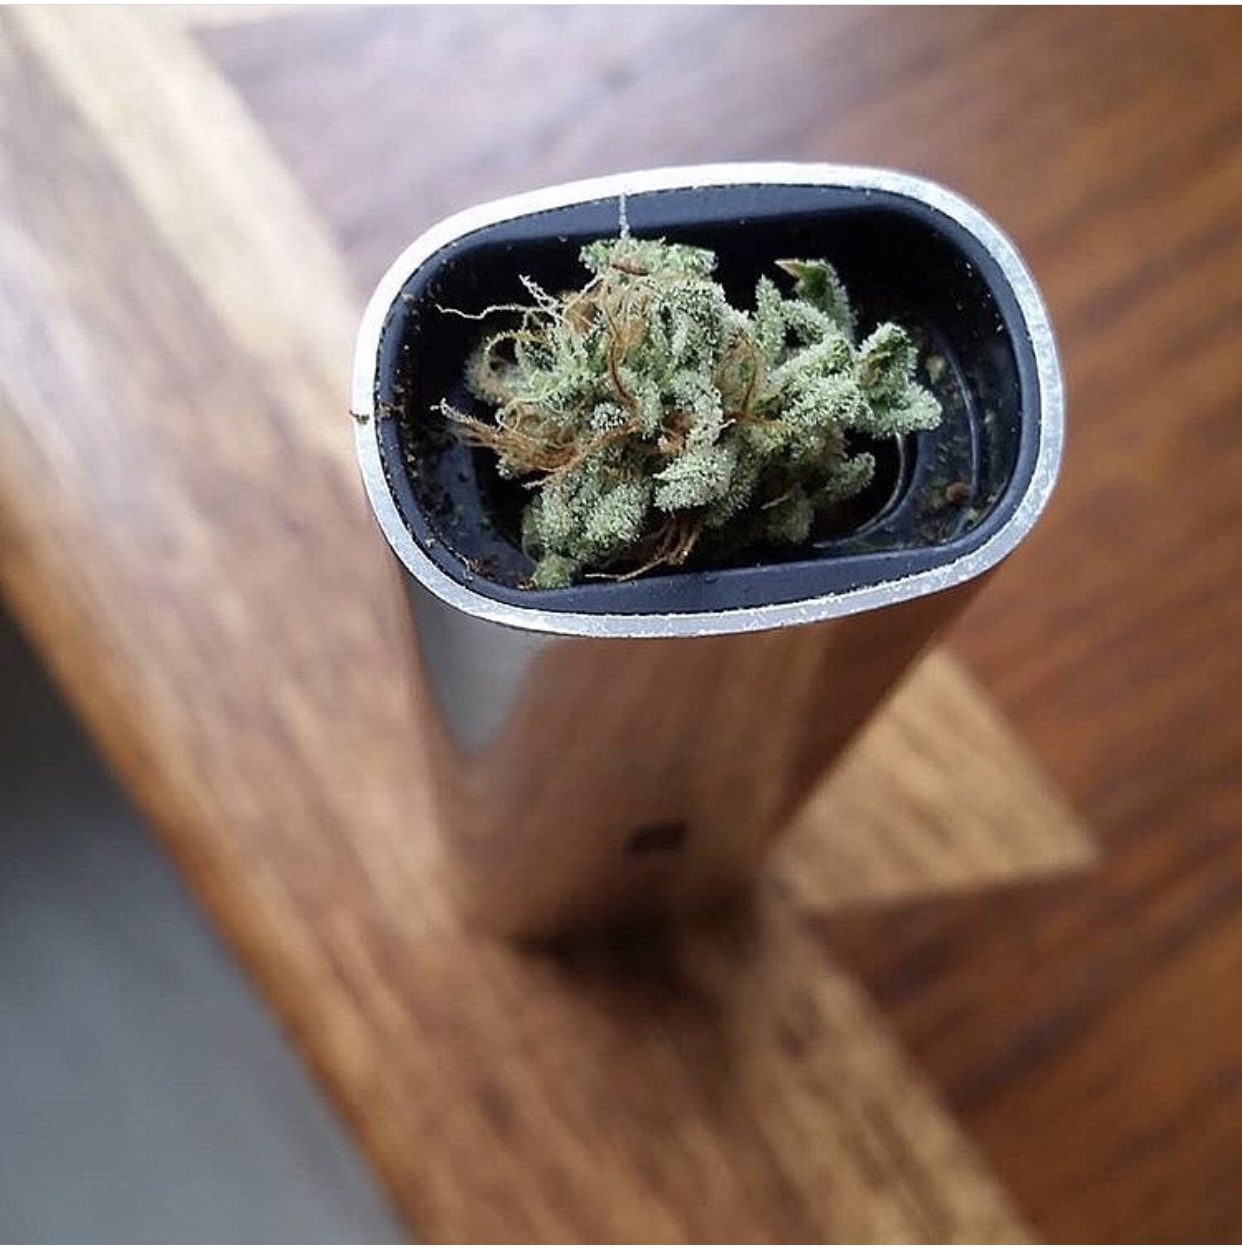 cannabis flowers in pax vaporizor